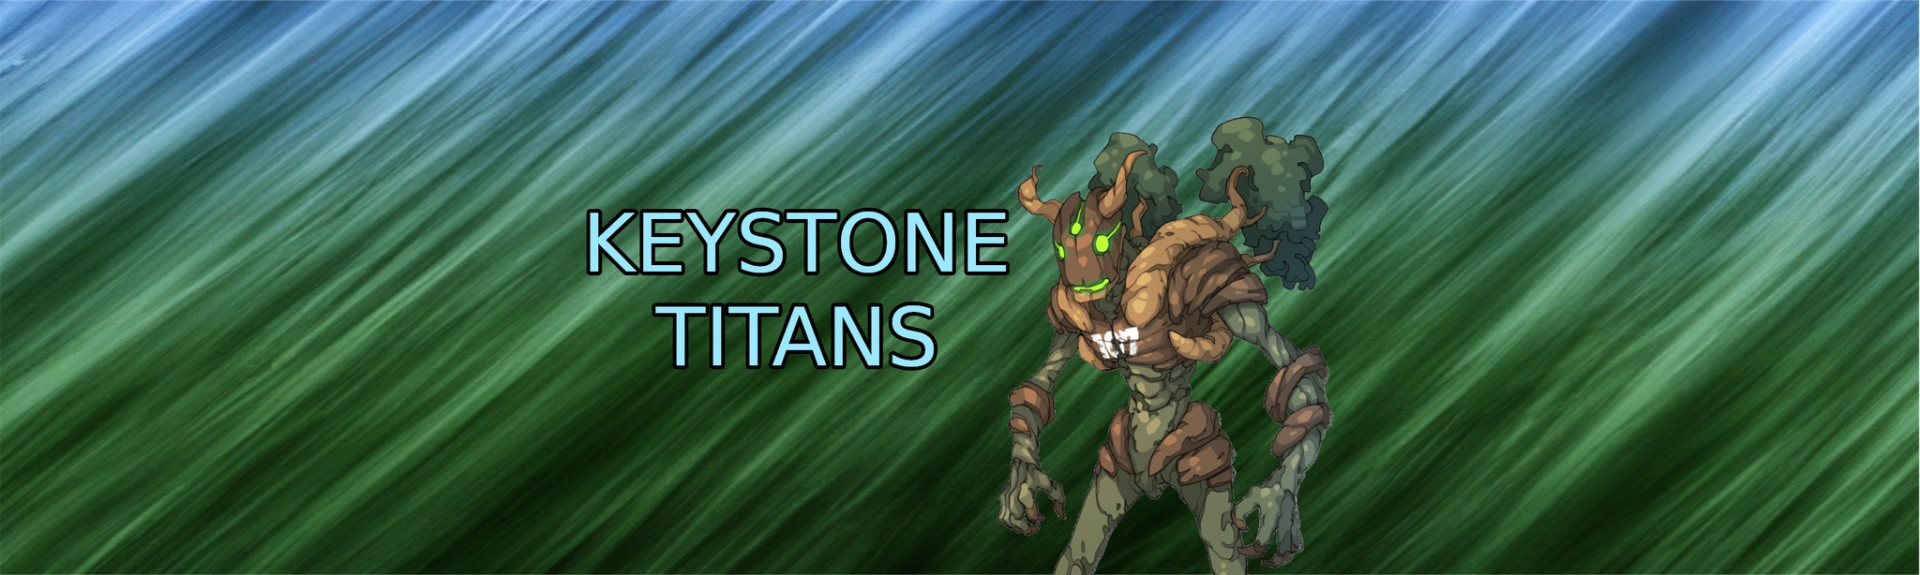 Keystone Titans